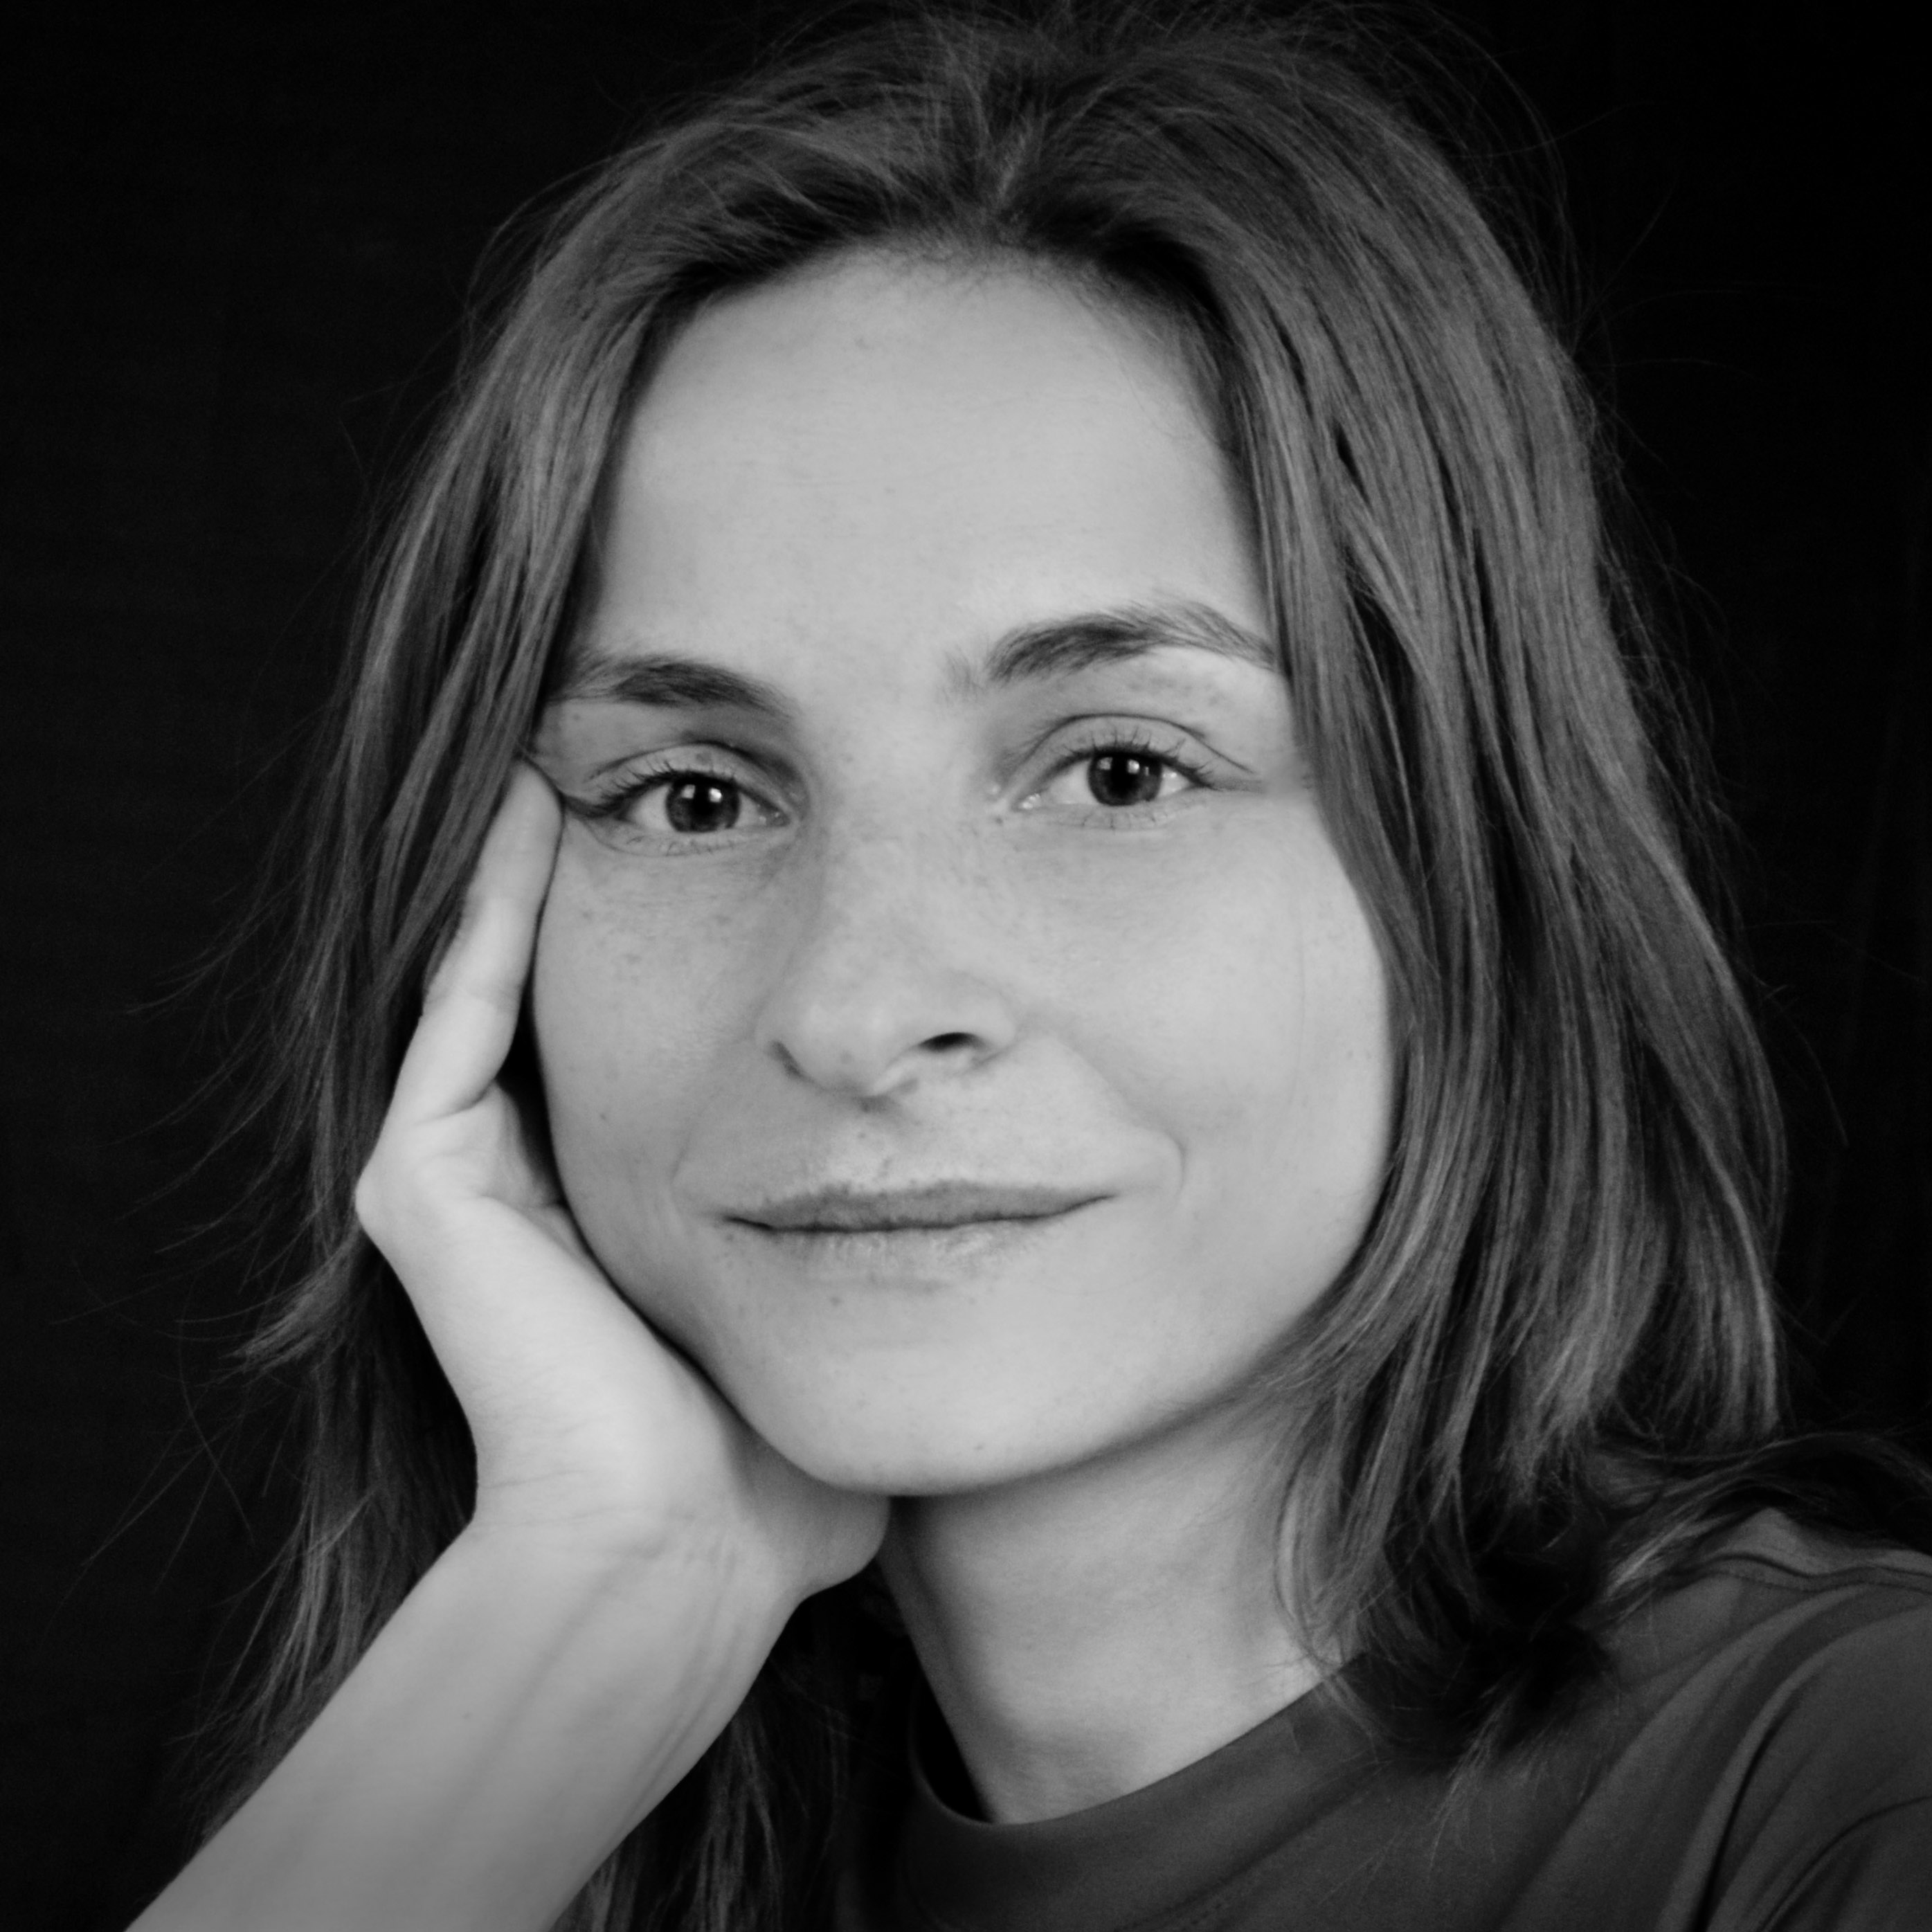 Shevchenko Marianna